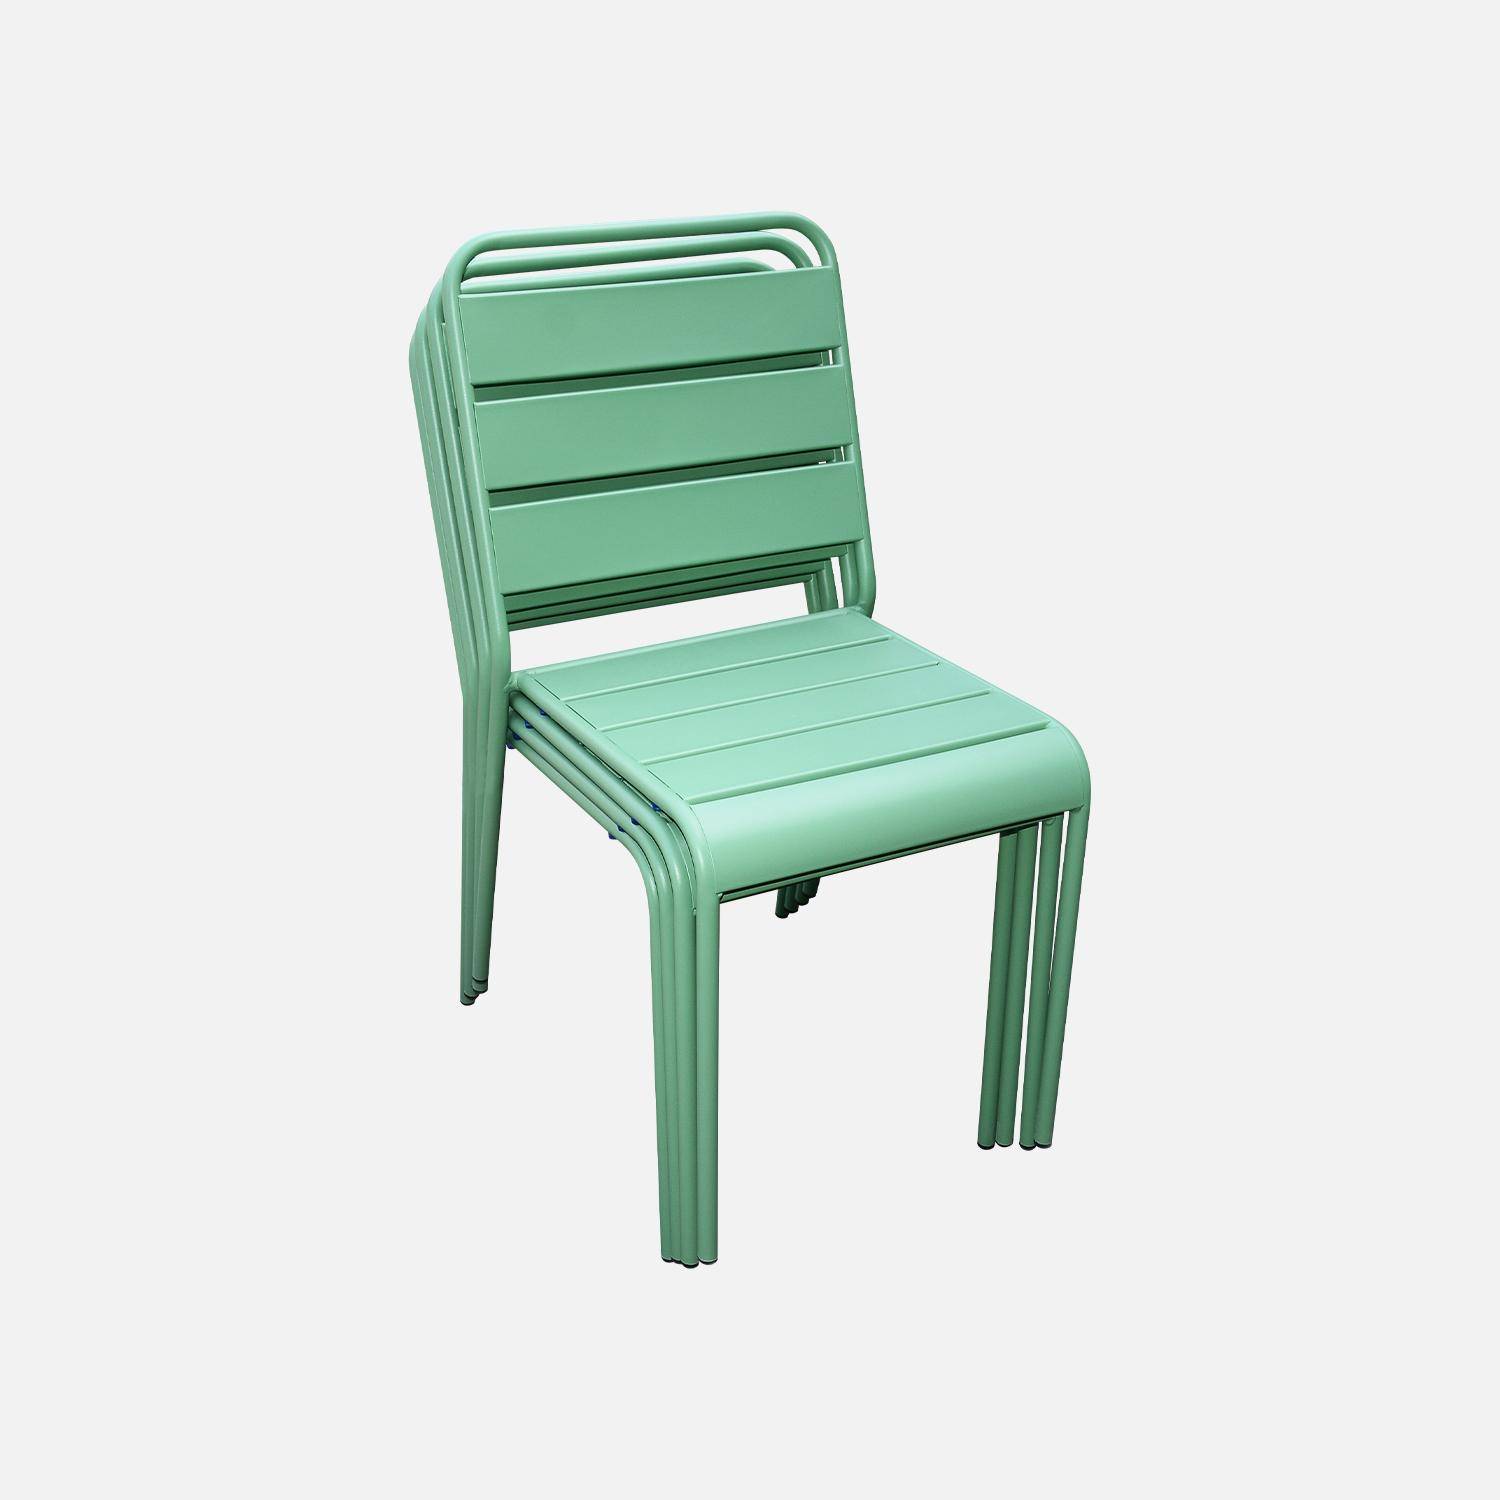 Table de jardin en métal 160x90cm + 4 chaises empilables et 2 fauteuils vert jade,sweeek,Photo5